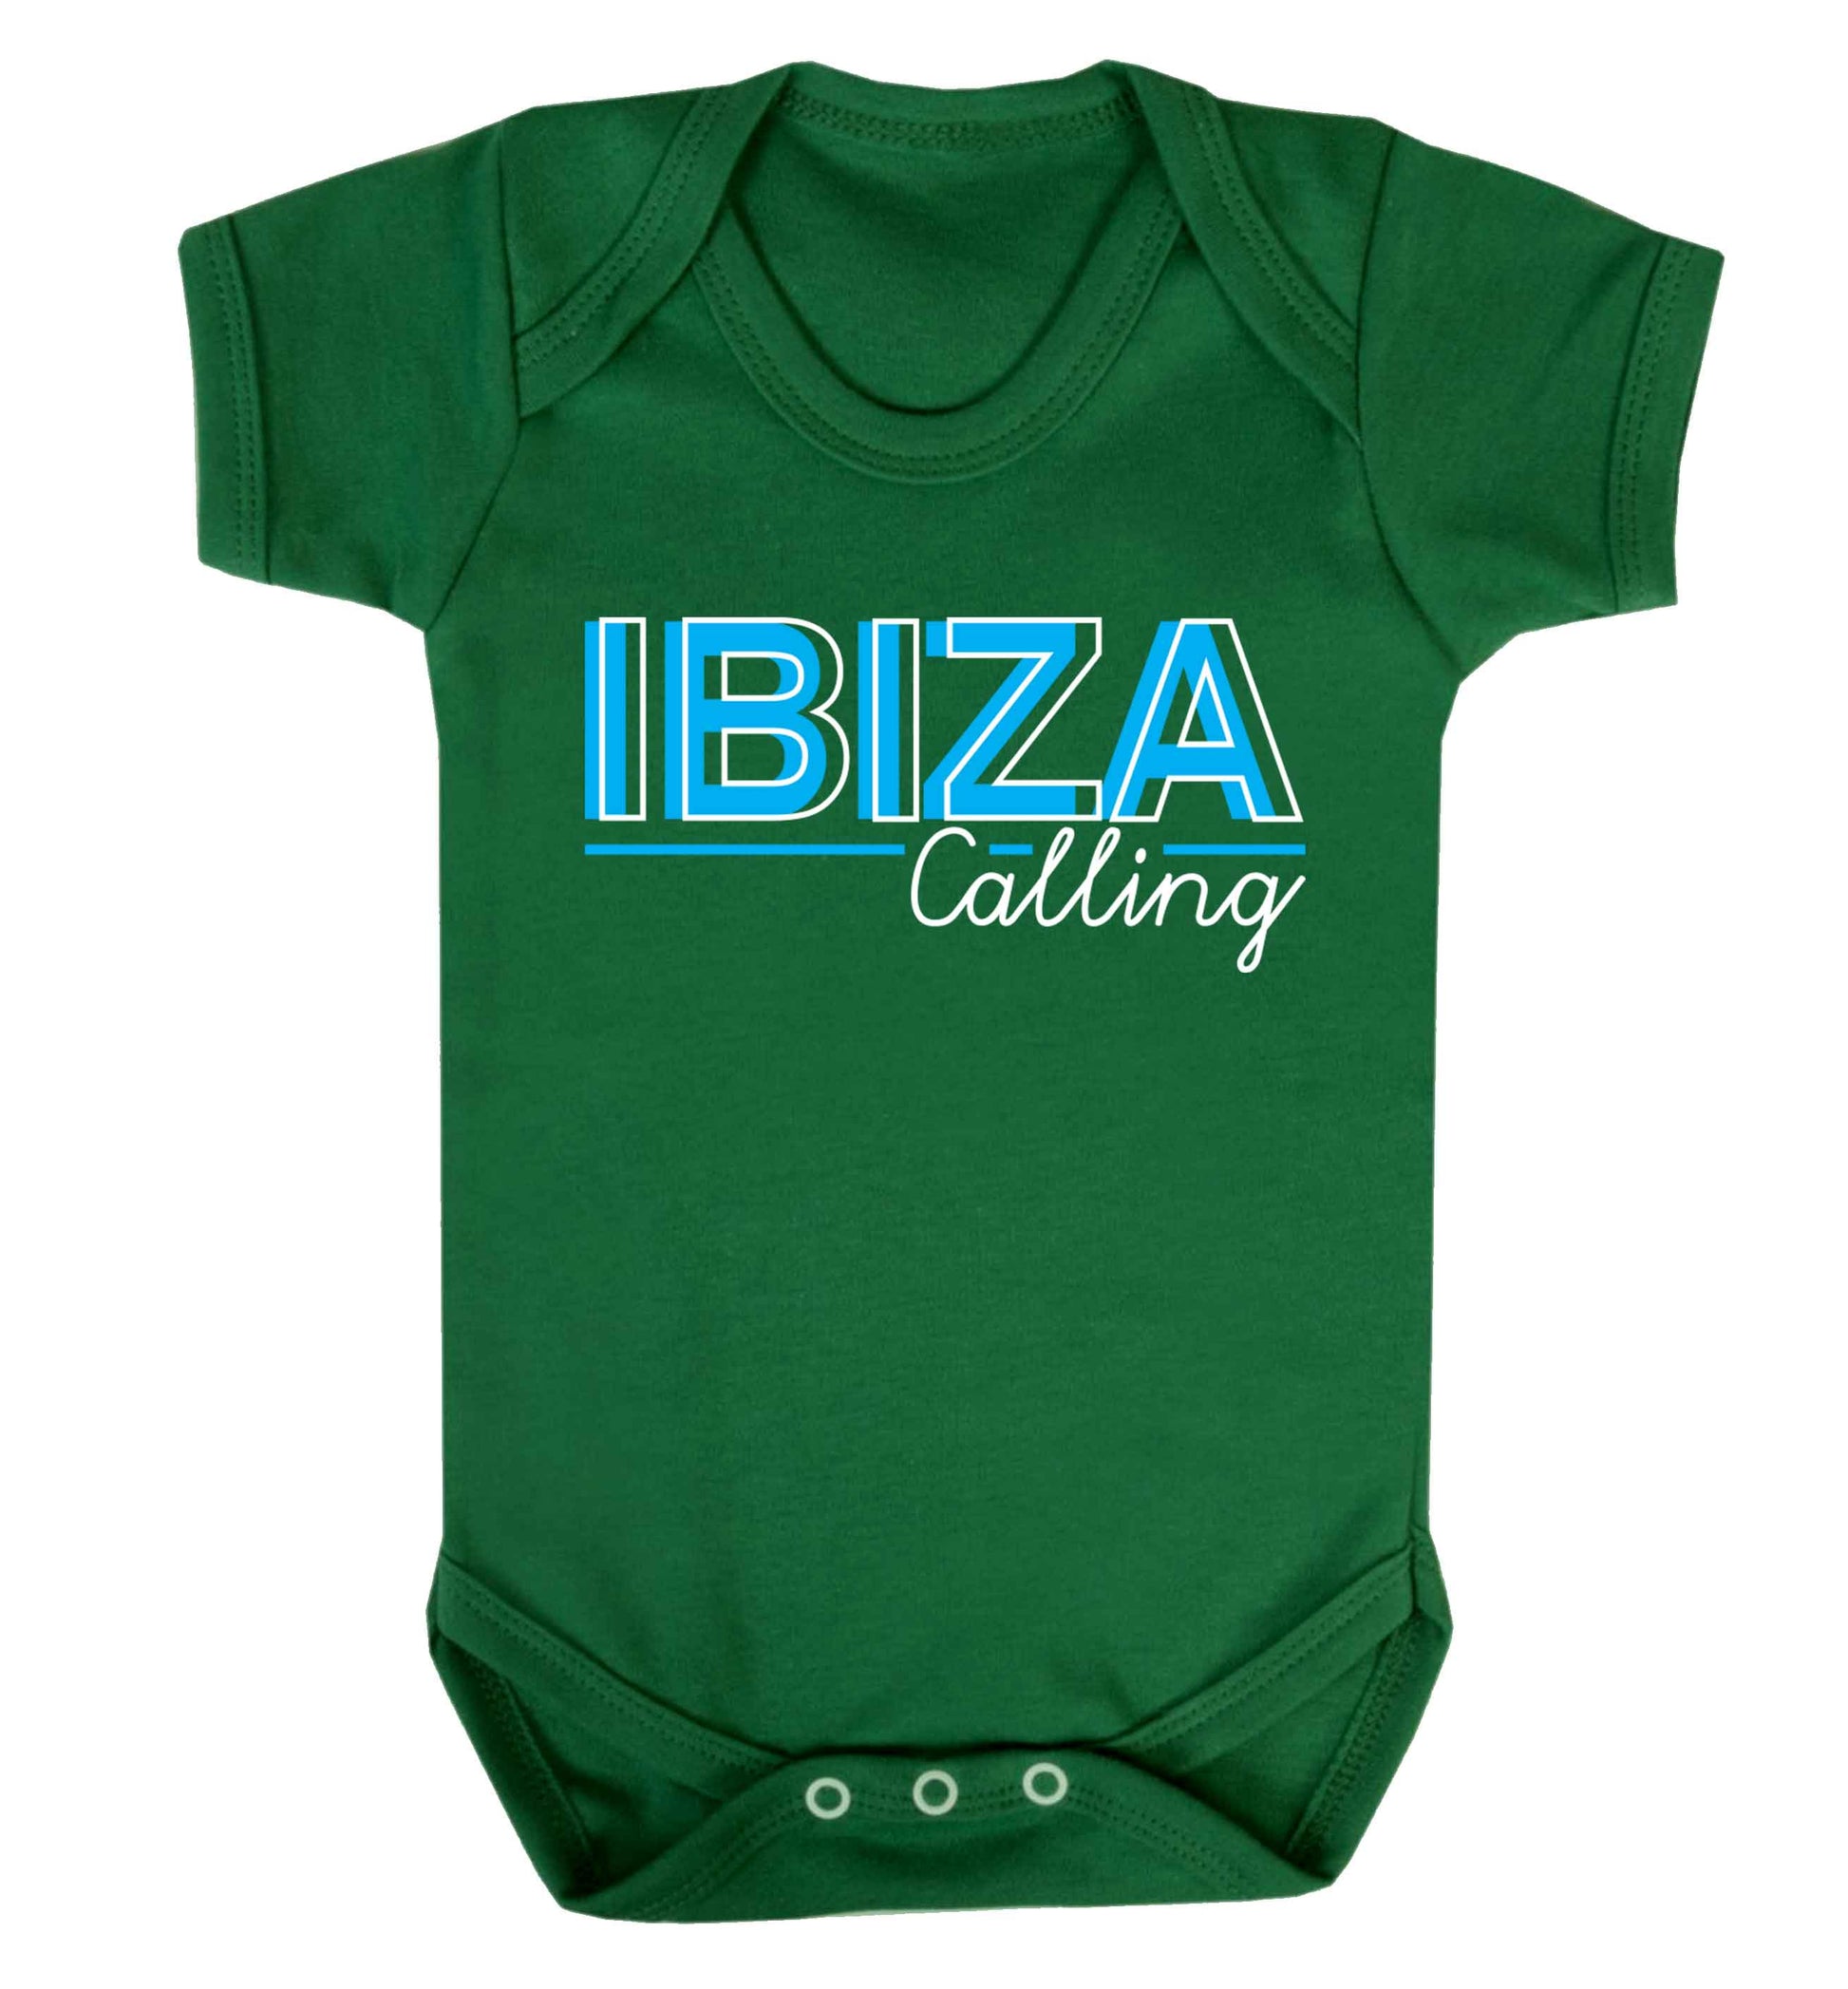 Ibiza calling Baby Vest green 18-24 months